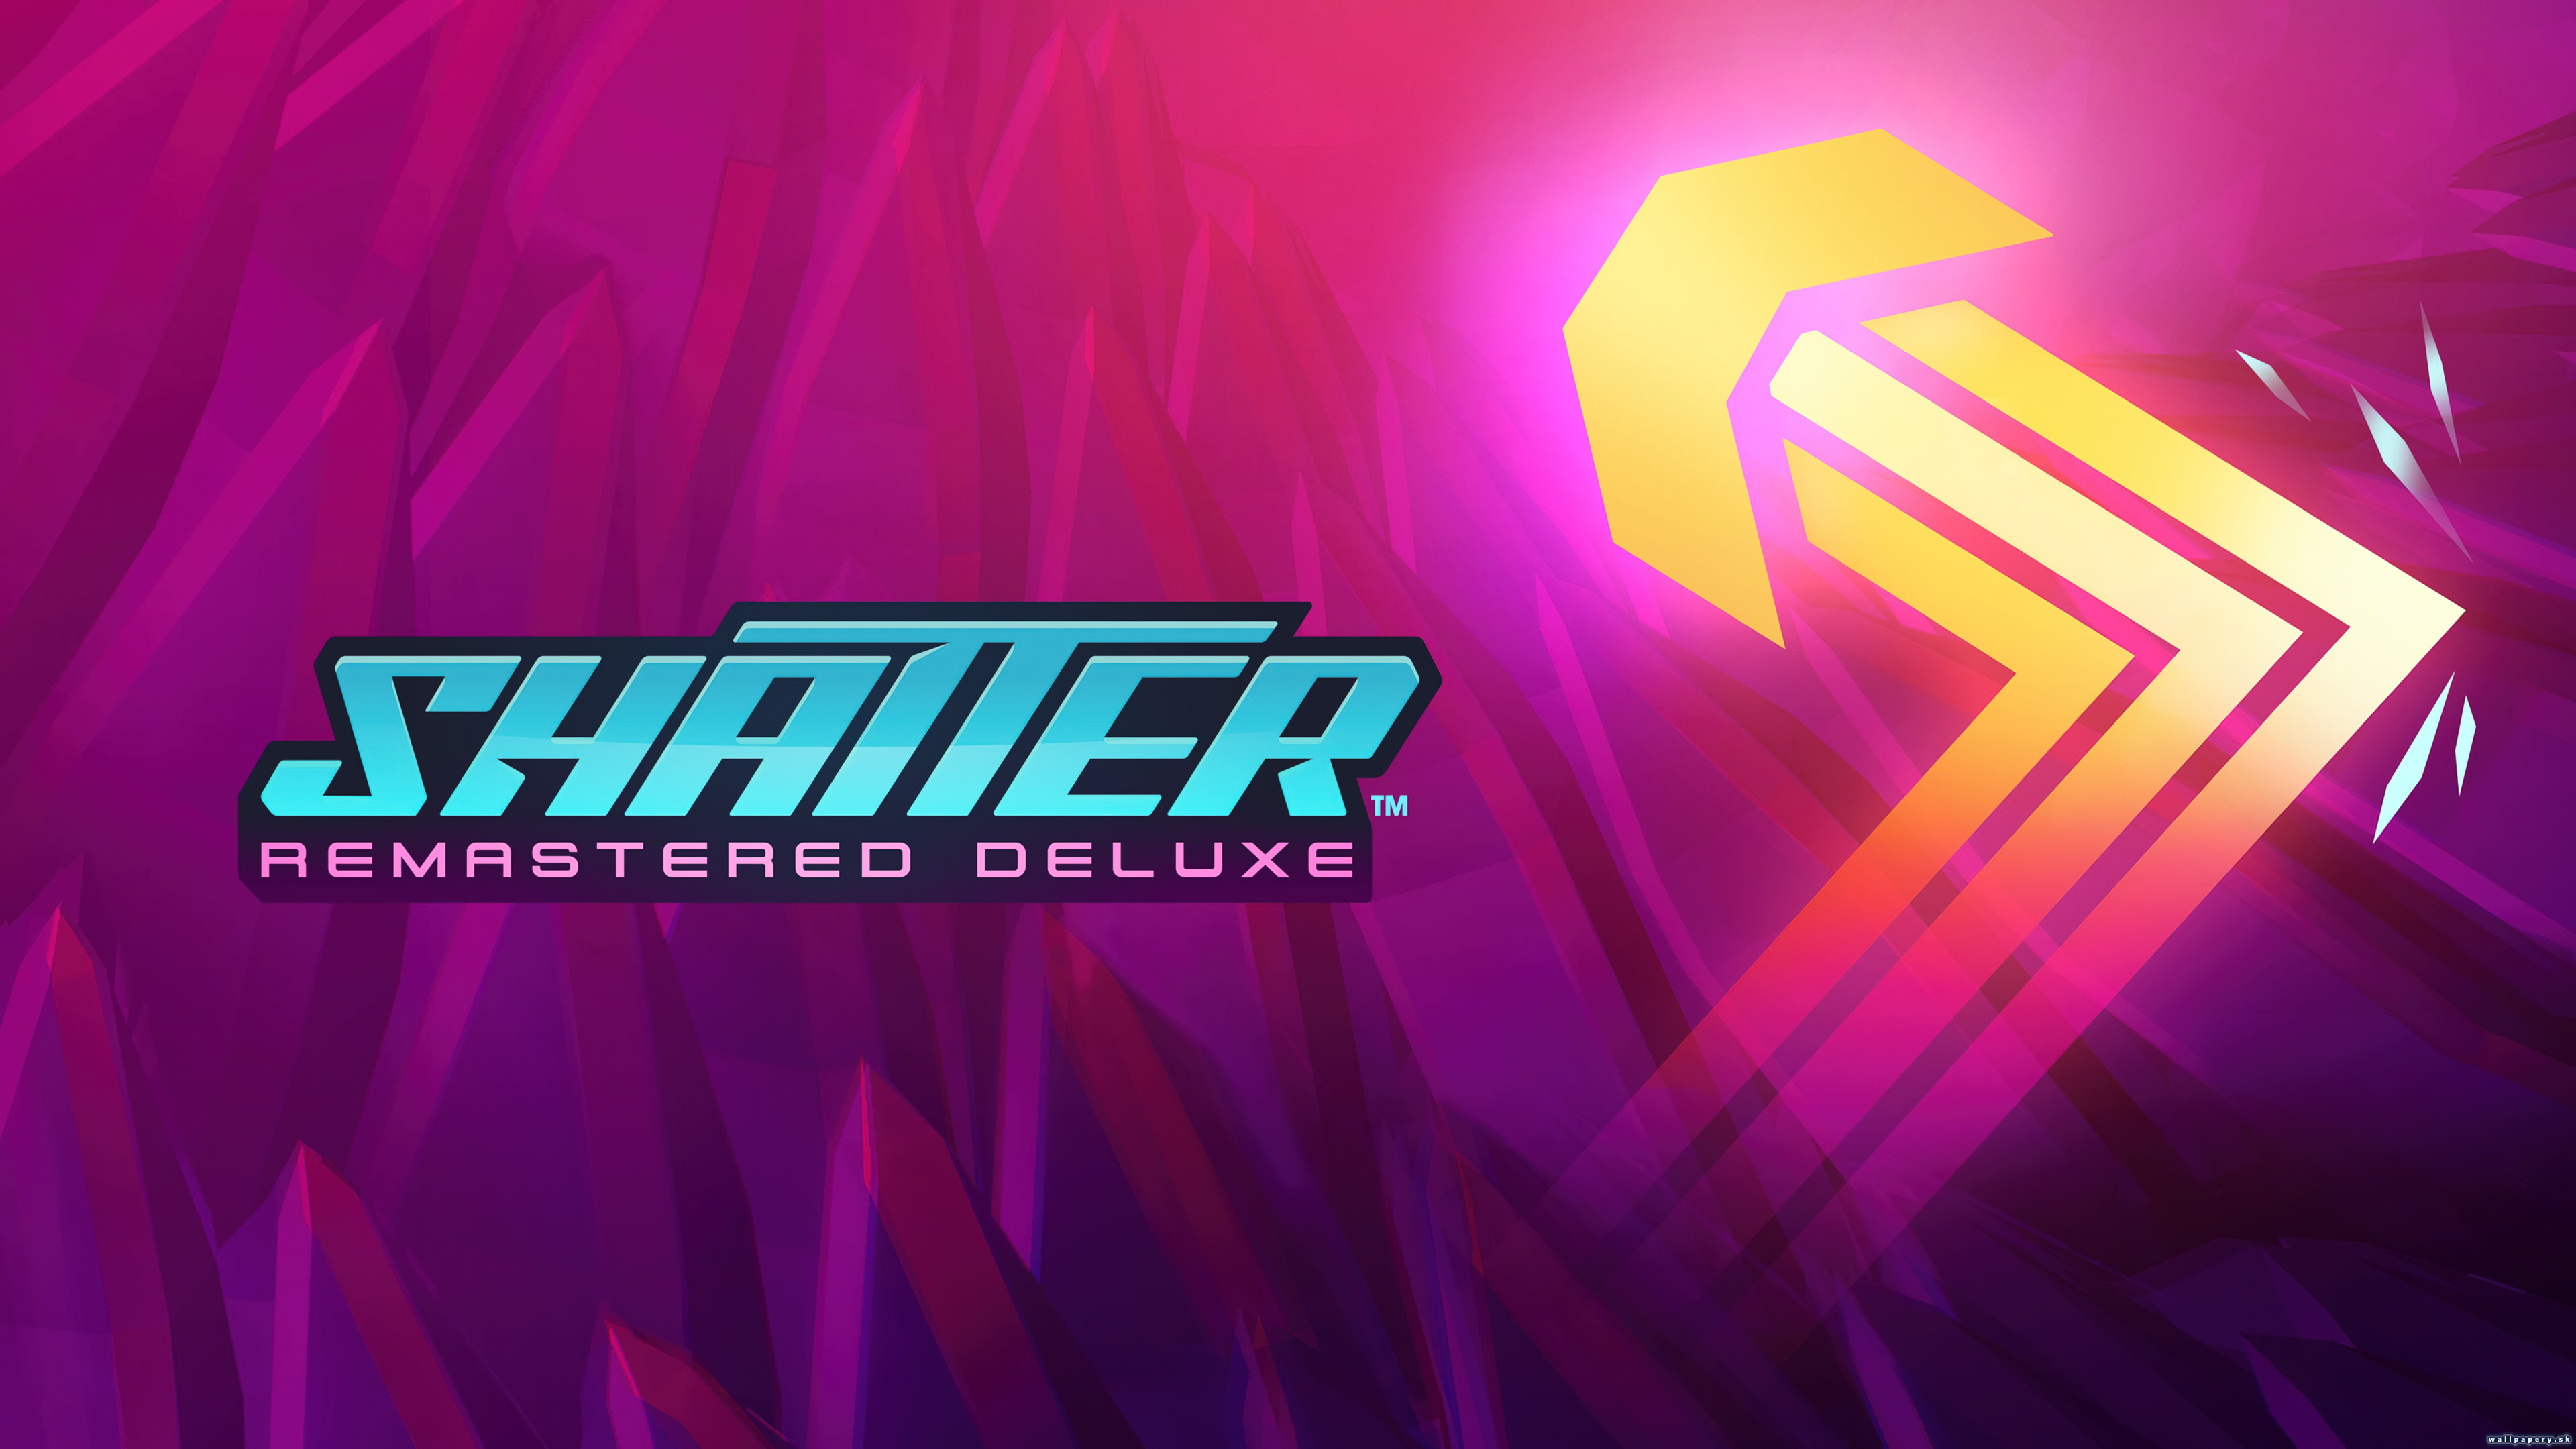 Shatter Remastered Deluxe - wallpaper 2